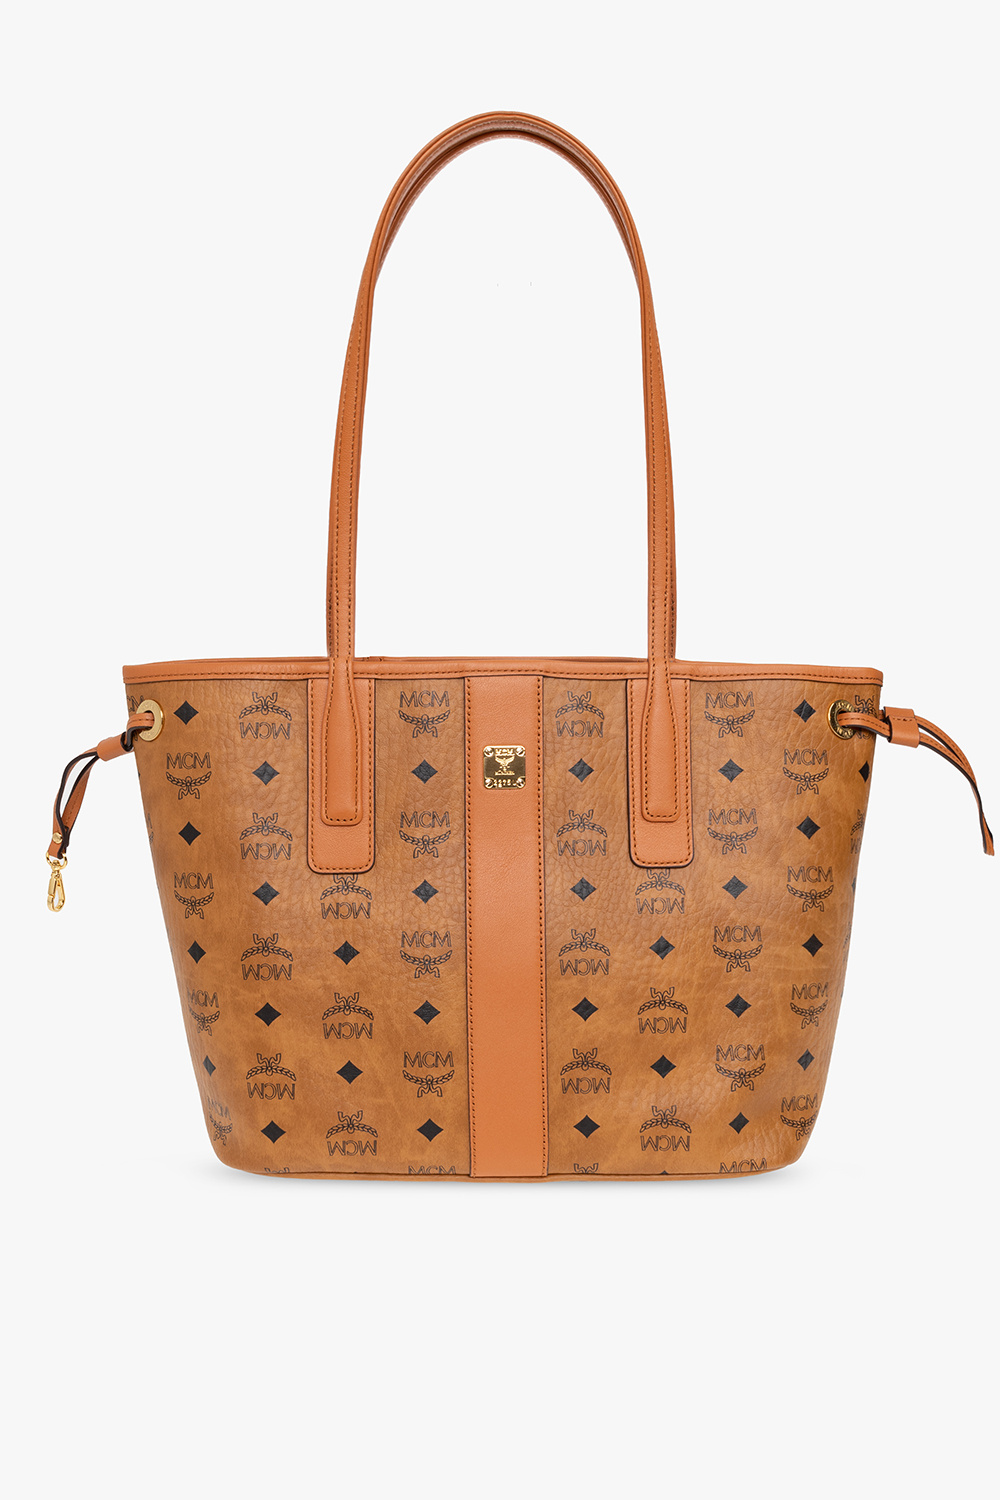 MCM Women's Mini Bags, Luxury Leather Designer Mini Handbags